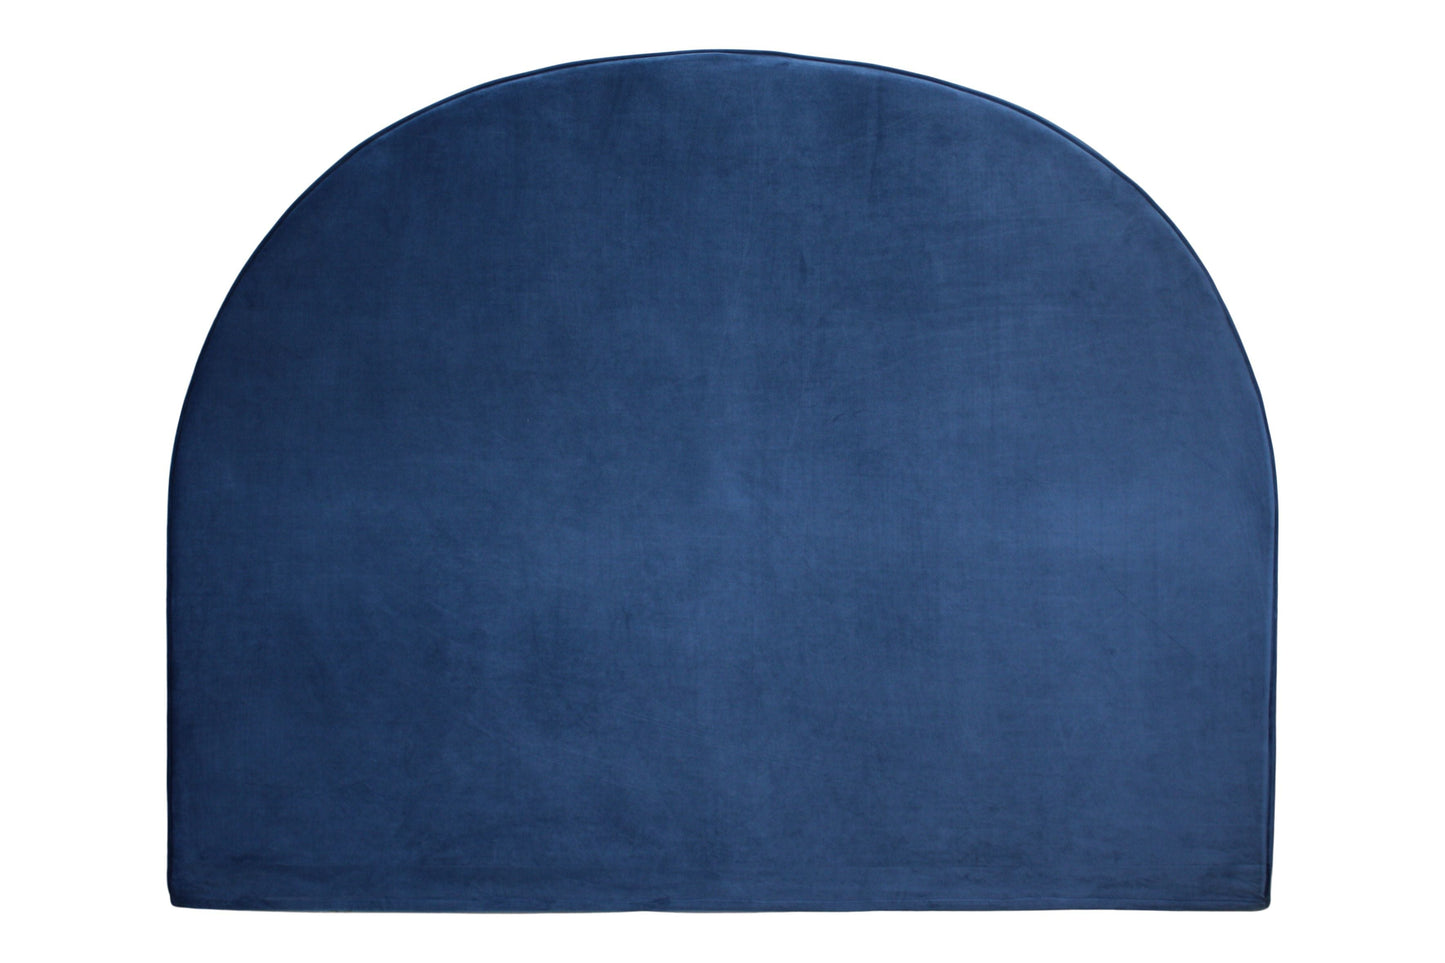 Arched Bedhead - Blue Velvet